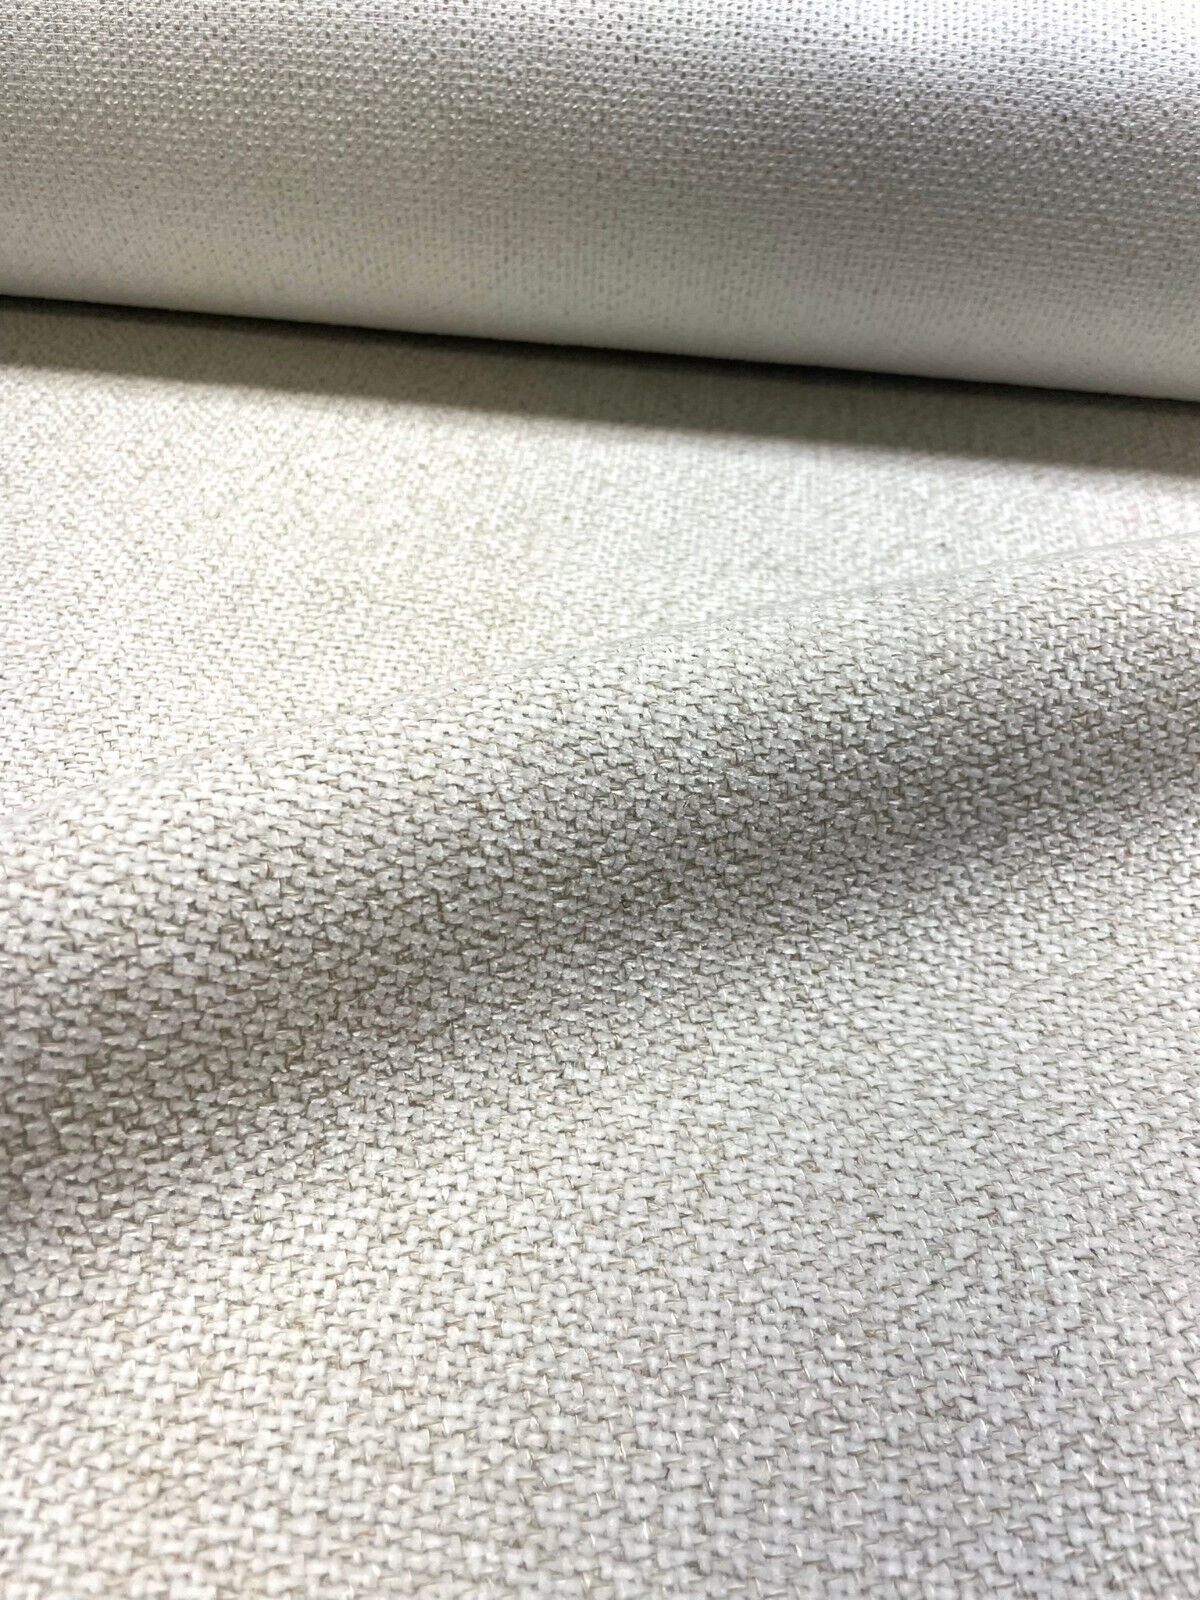 9.25 yds Dorrell Fabrics Camila Oatmeal White Cotton Blend Upholstery Fabric